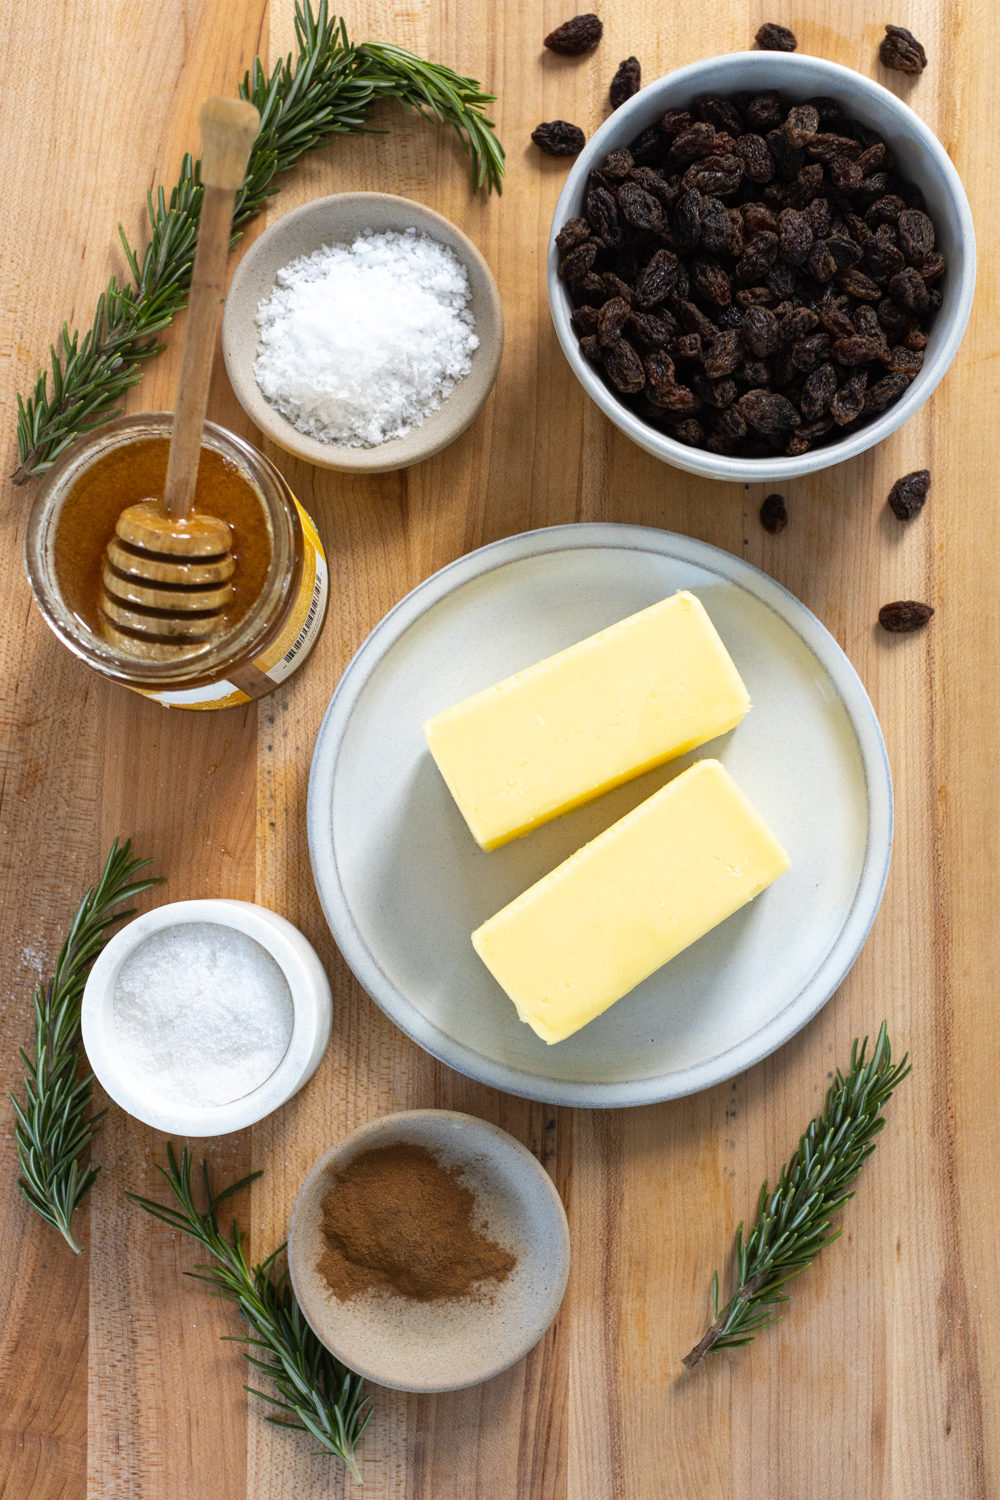 Ingredients for the Cinnamon Raisin Honey Butter Board